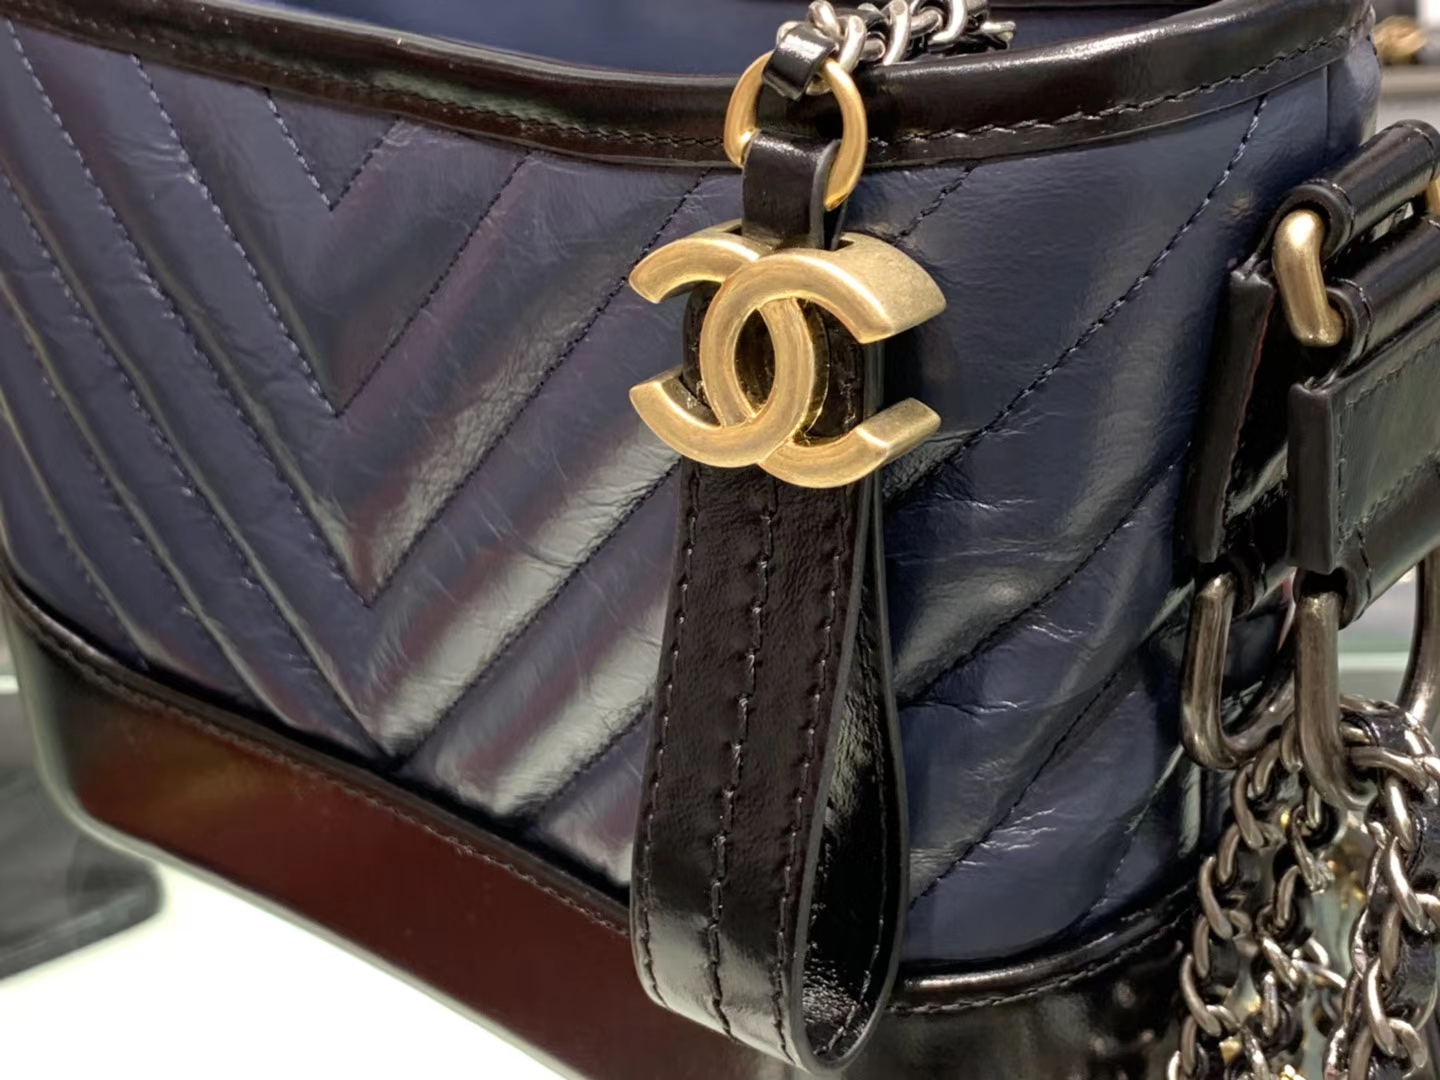 Chanel（香奈儿）𝖌𝖆𝖇𝖗𝖎𝖊𝖑𝖑𝖊 # 流浪包〔黑配蓝V纹〕20cm